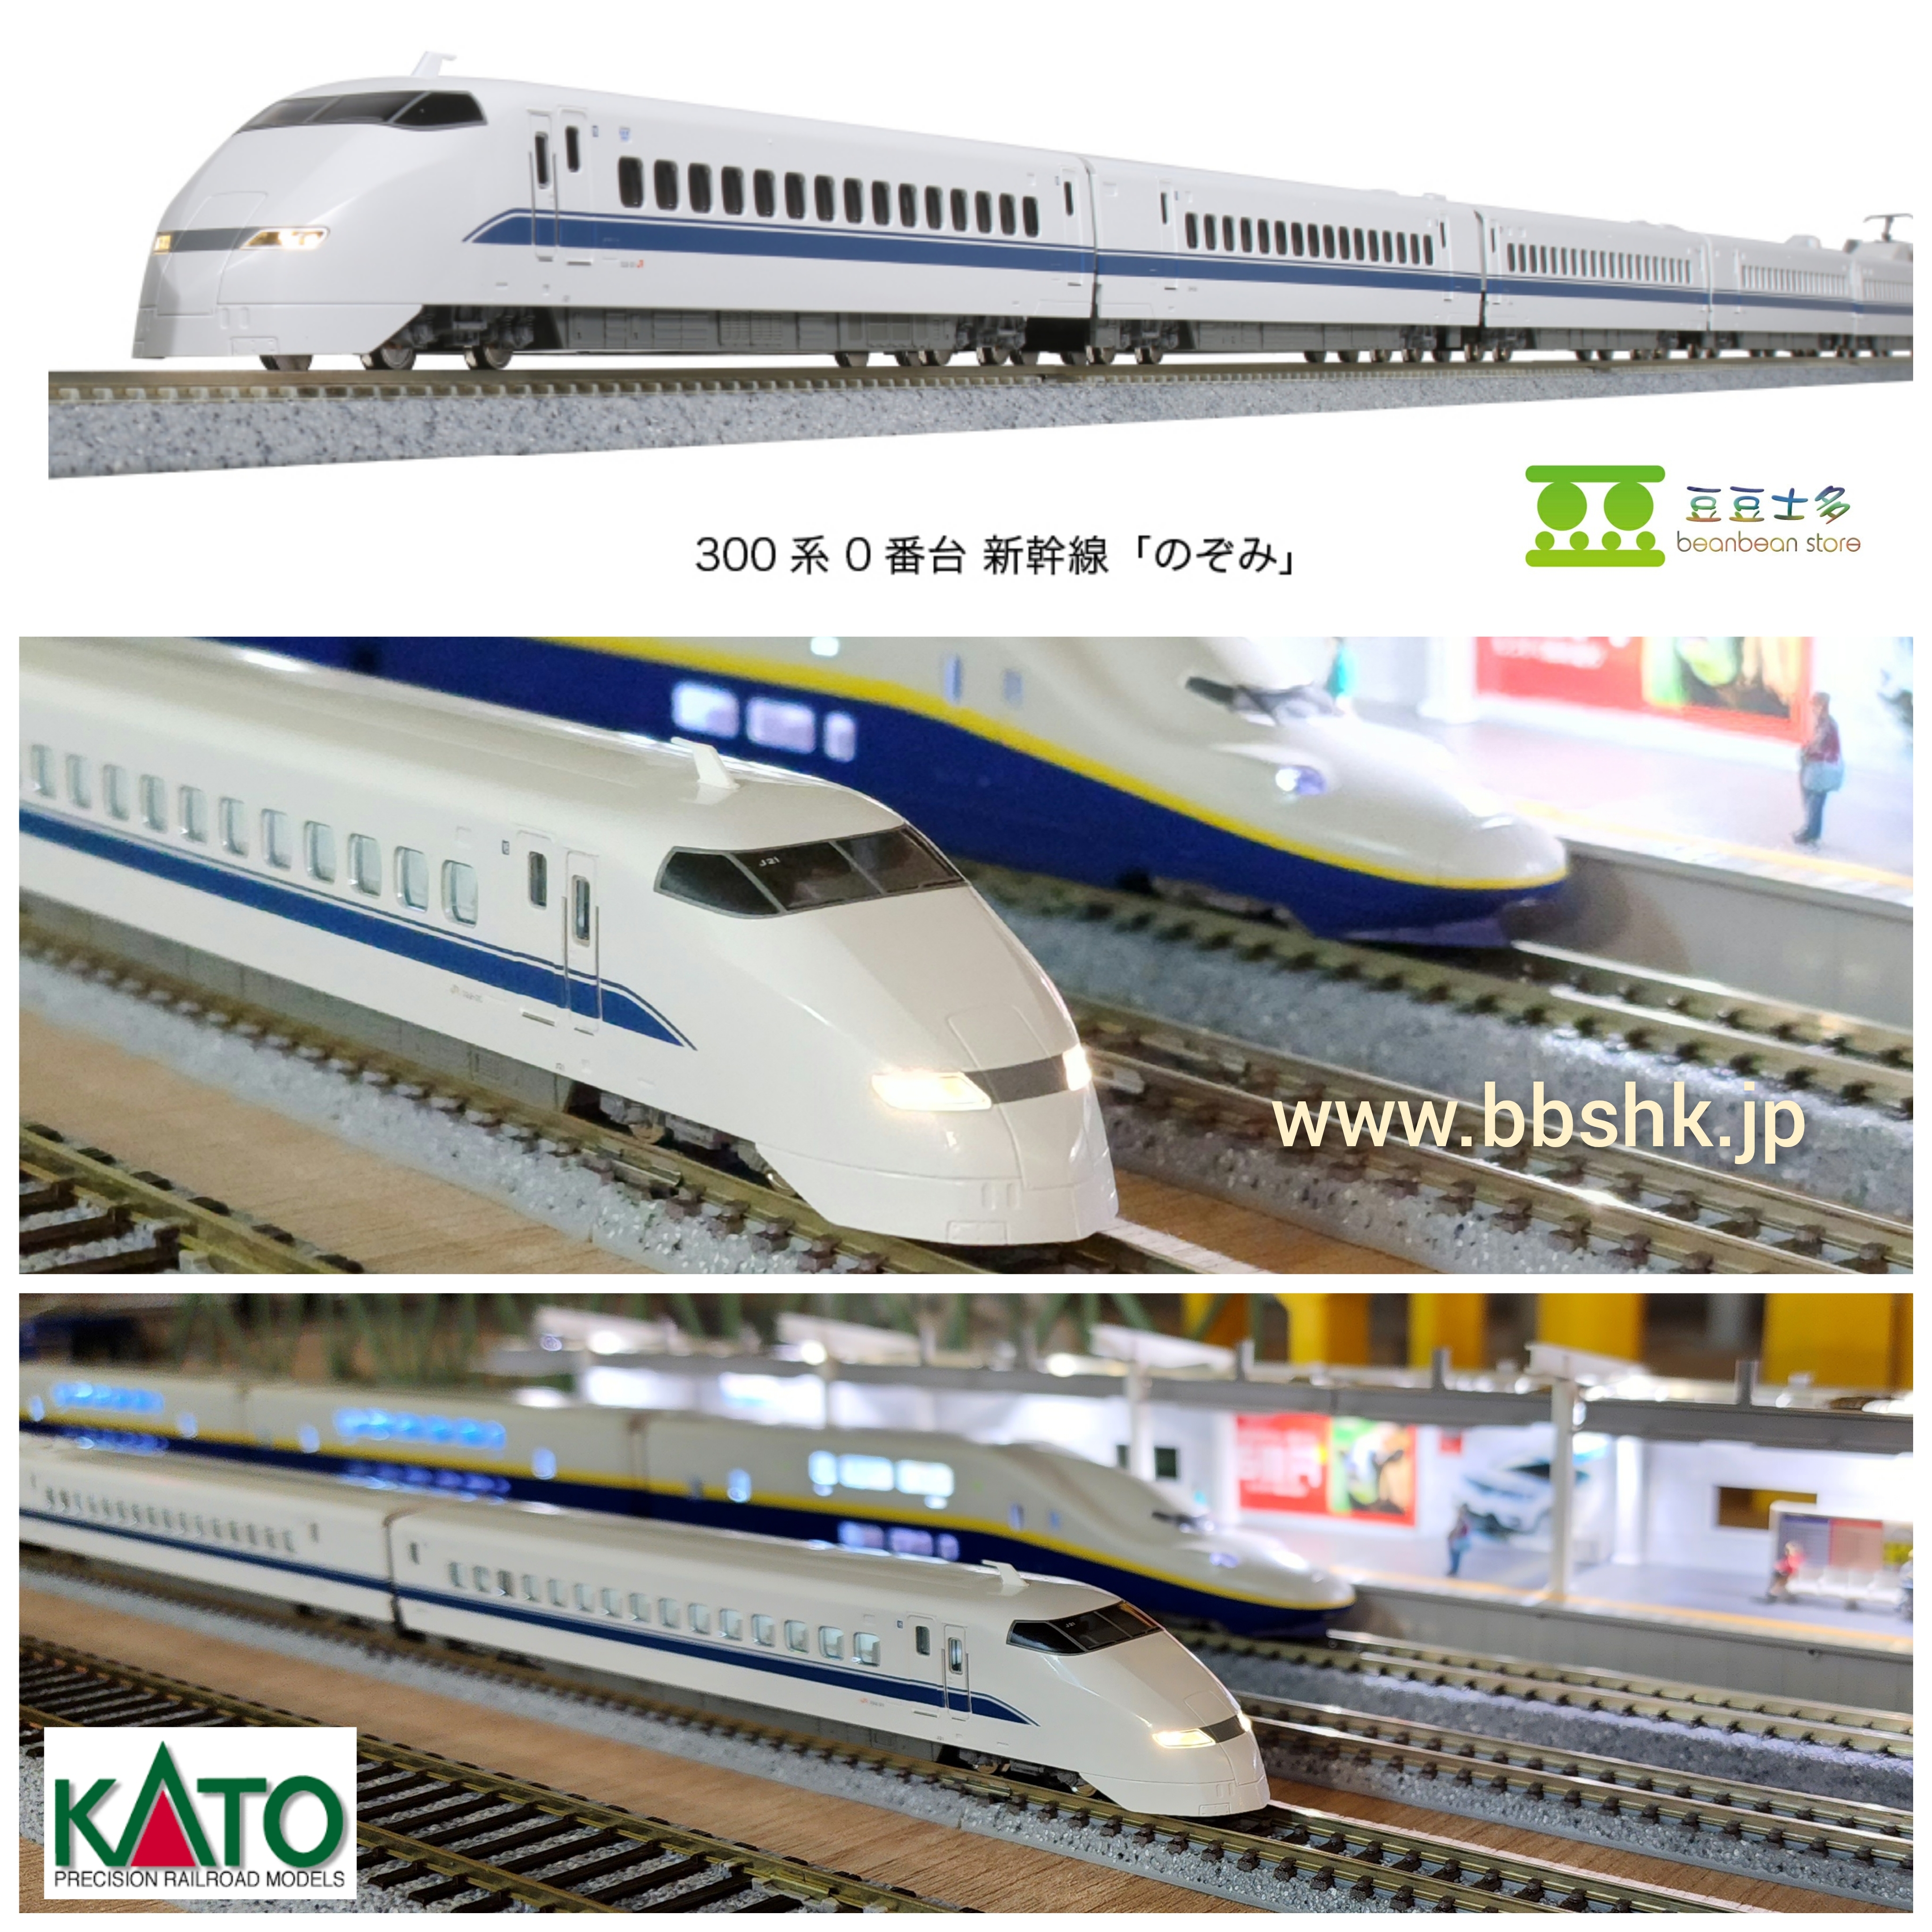 KATO 10-1766 <特別企画品> 300系0番台 新幹線 「のぞみ」 16両